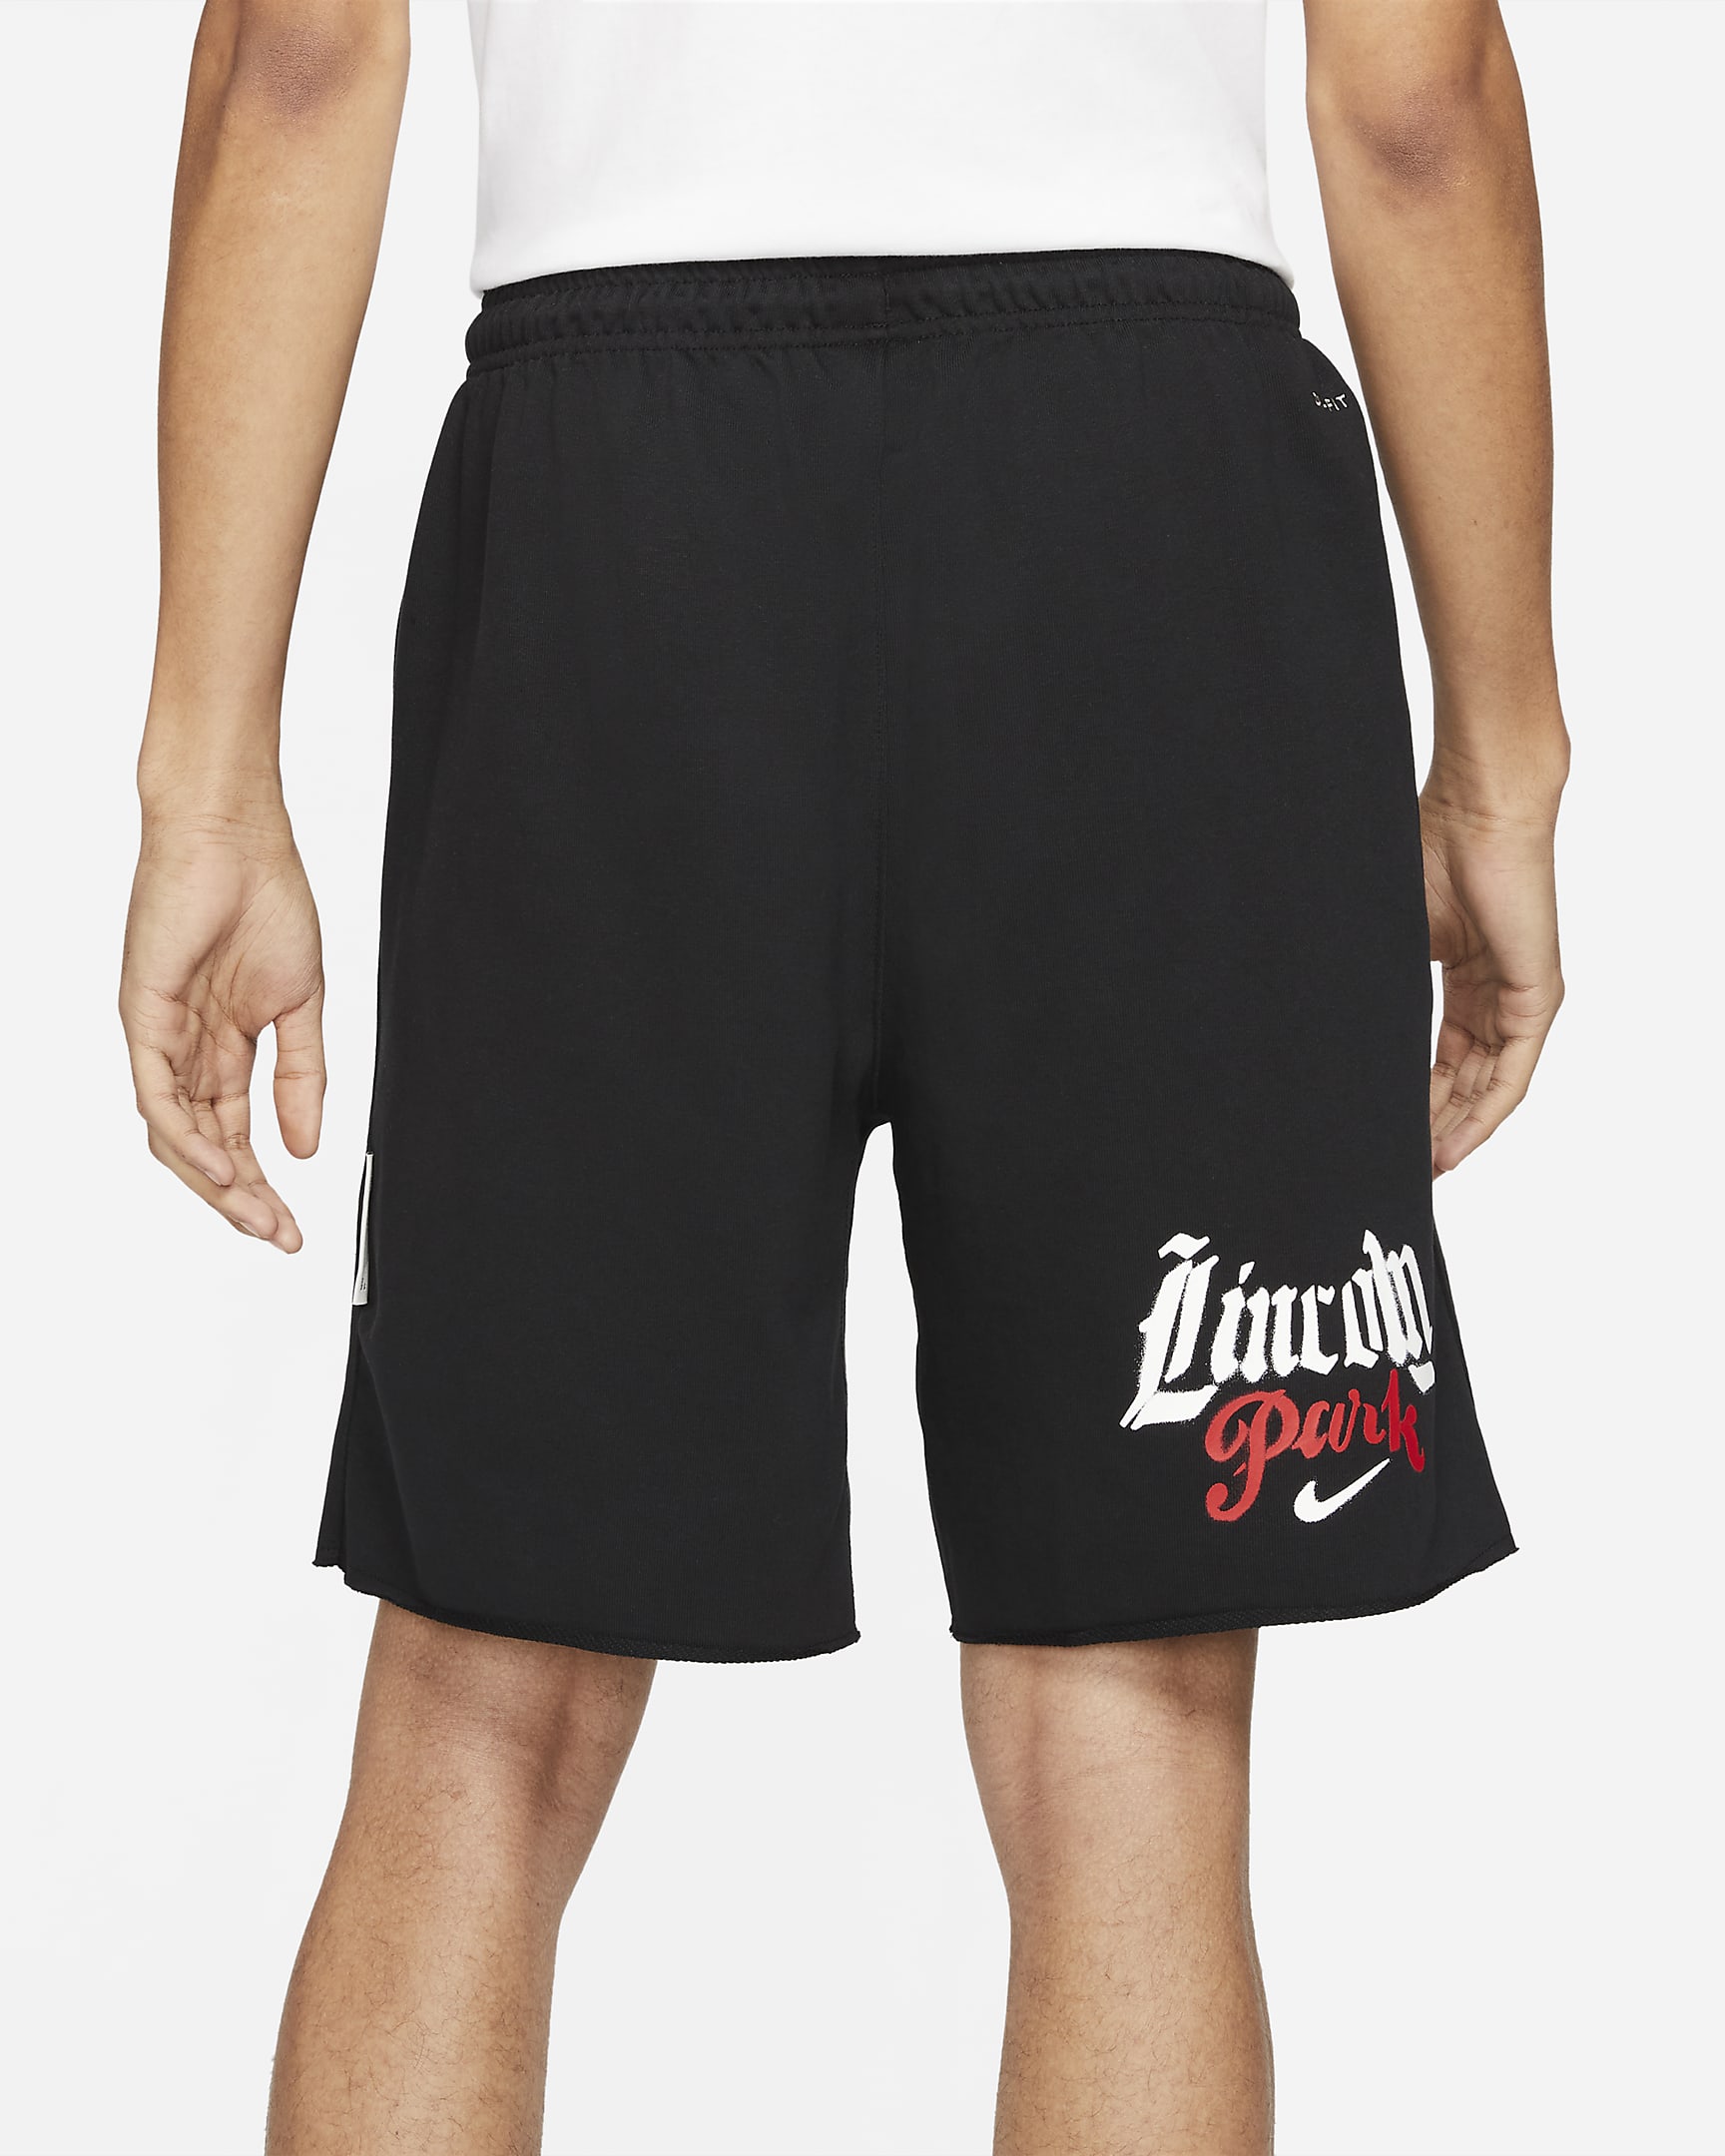 standard-issue-lincoln-park-mens-basketball-fleece-shorts-Wjf9fz-1.png